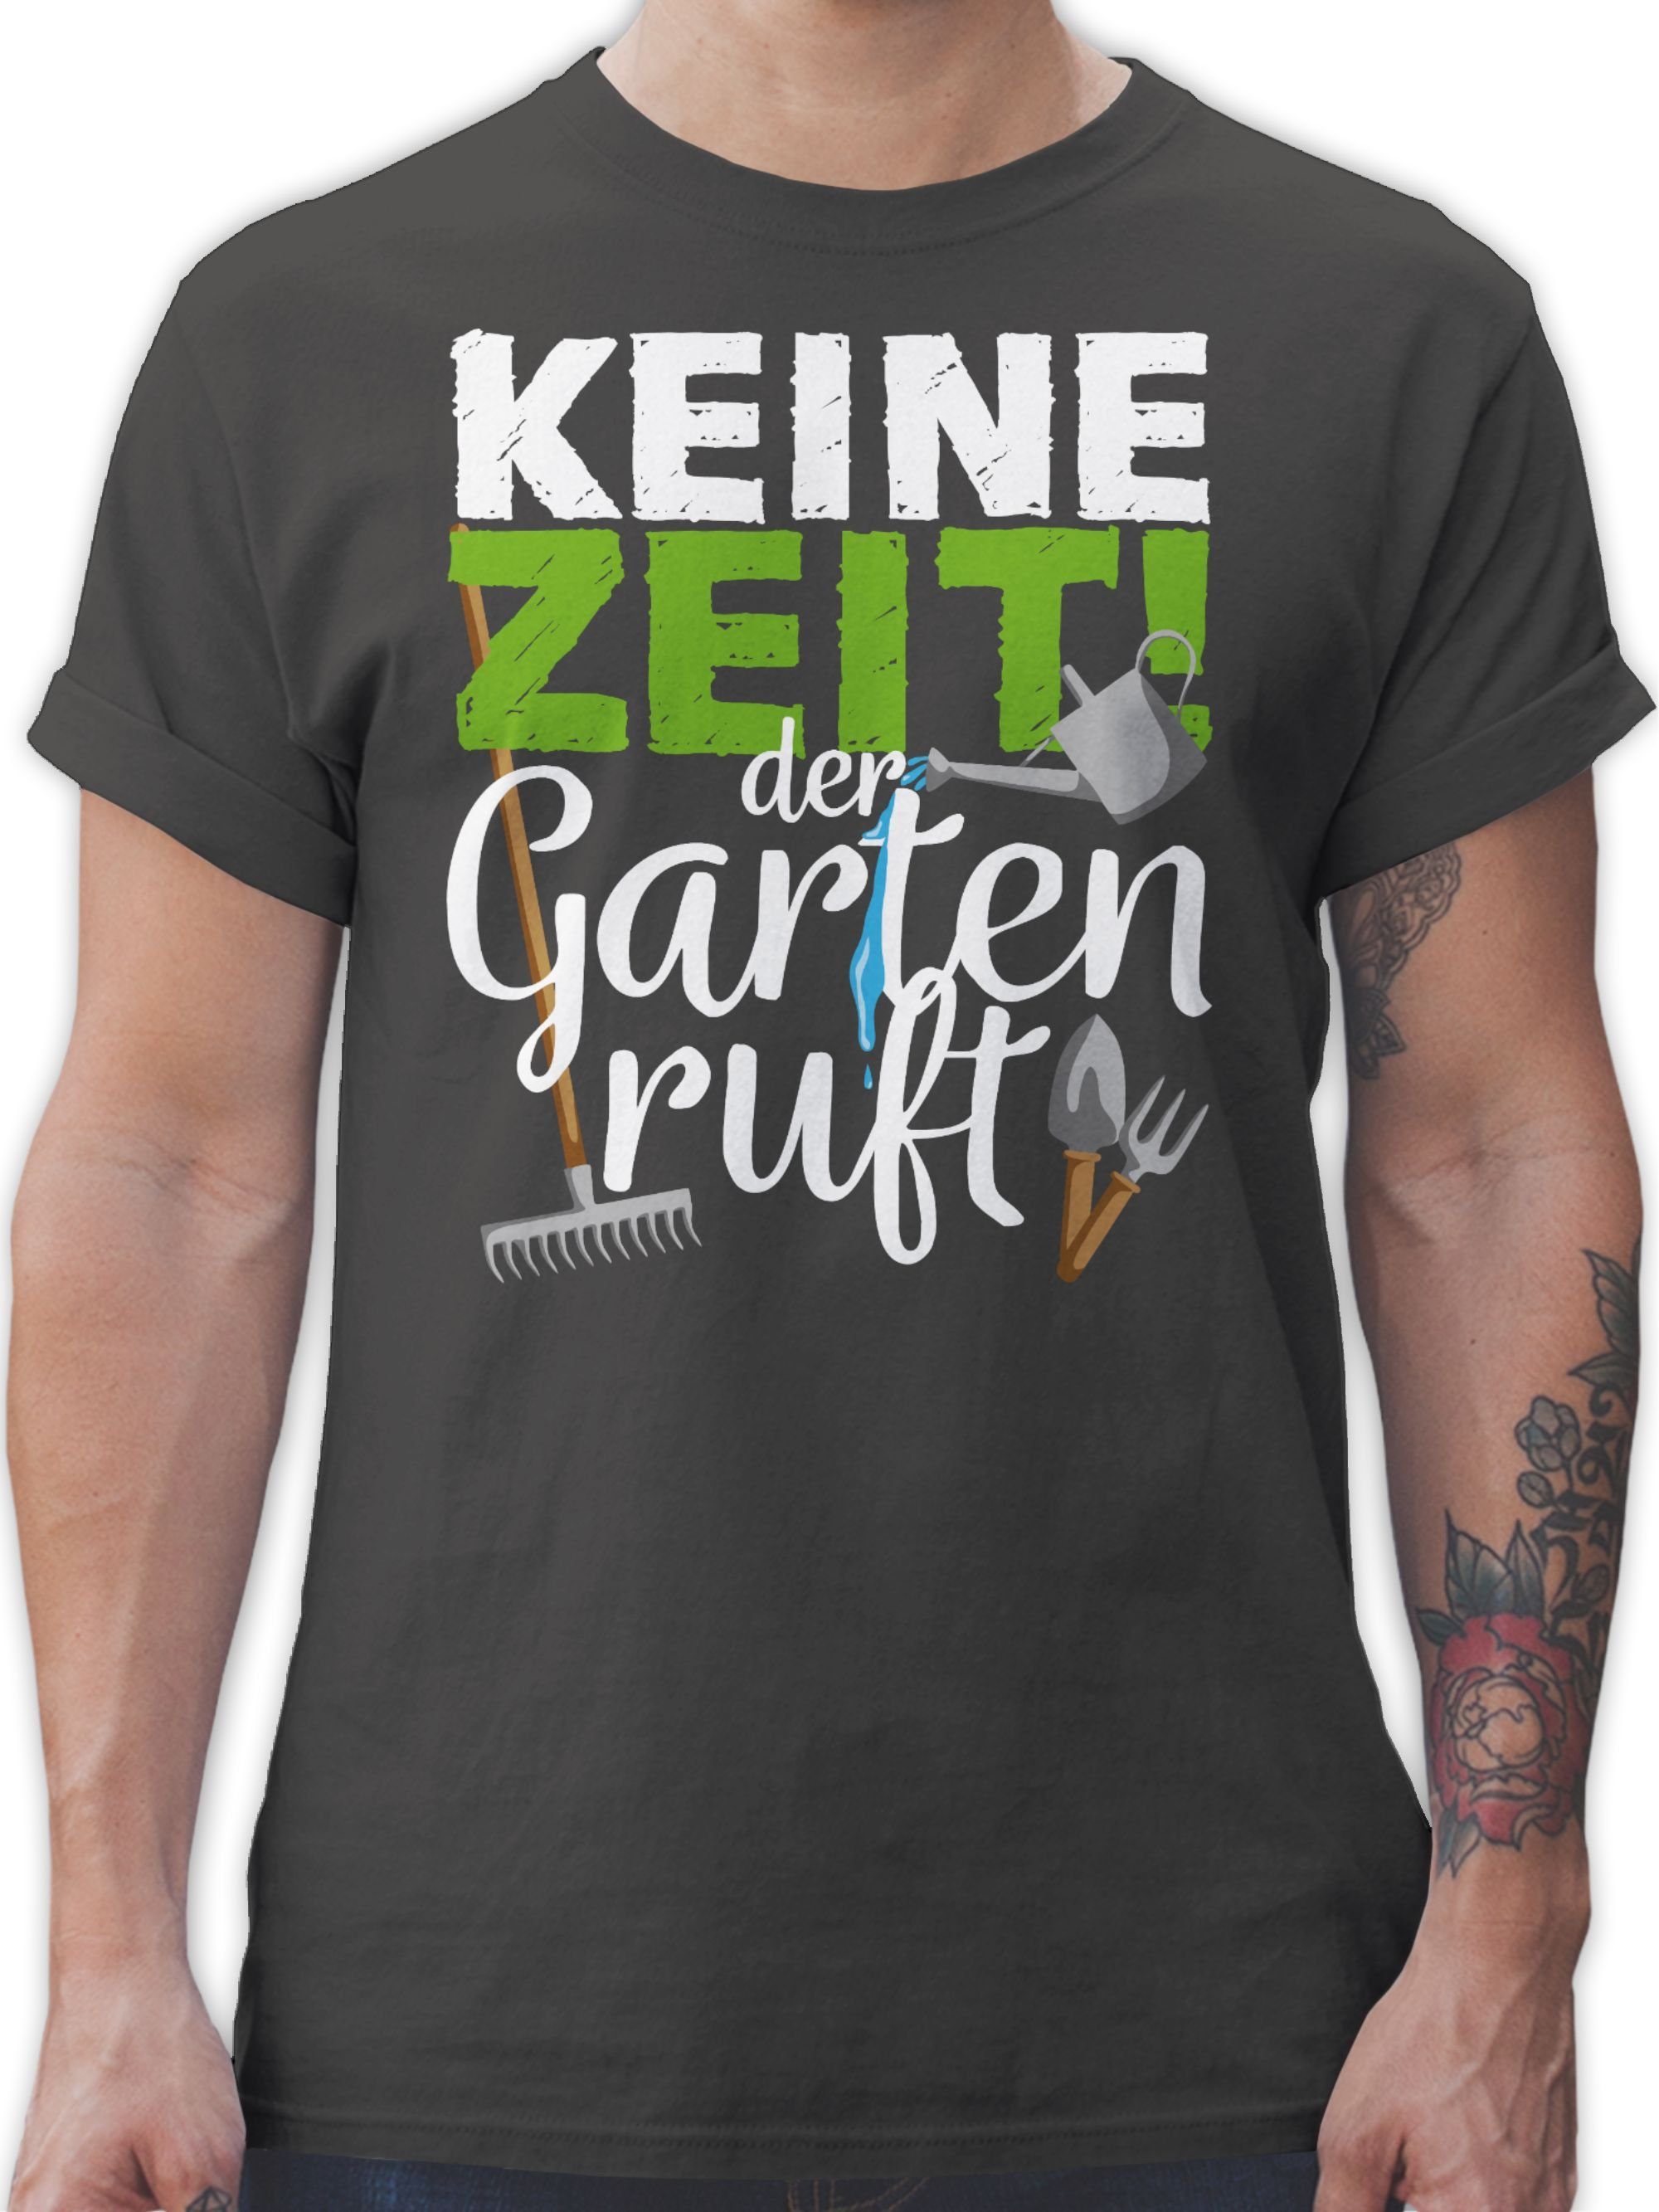 Gartengeräte Zeit - Garten 3 weiß Hobby Shirtracer Outfit T-Shirt der Keine Dunkelgrau - ruft